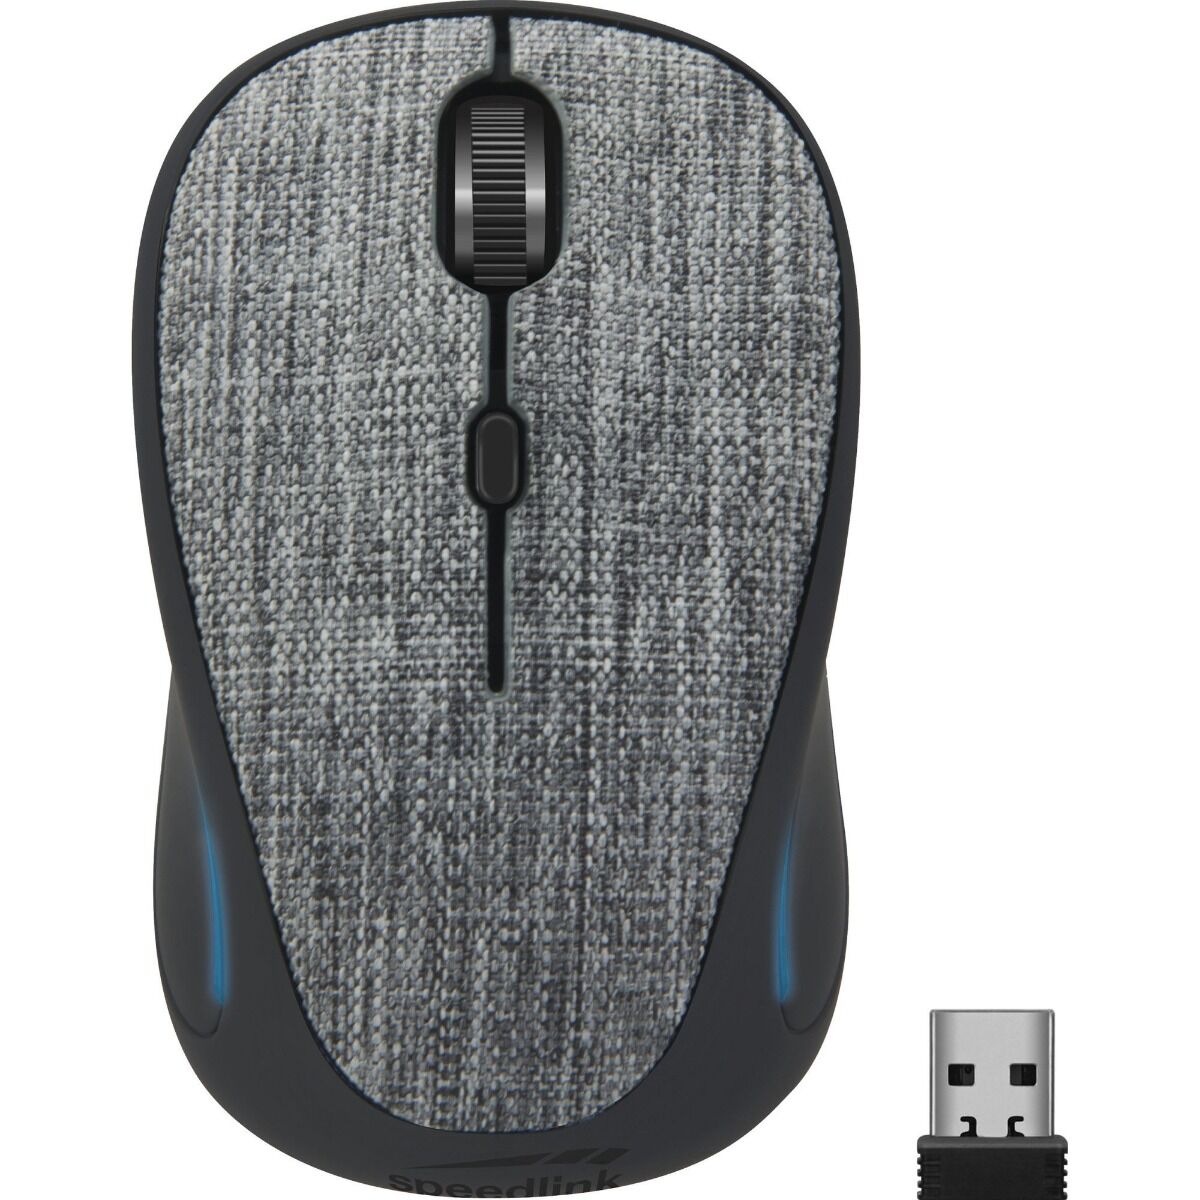 Mouse wireless USB Cius Grey SpeedLink